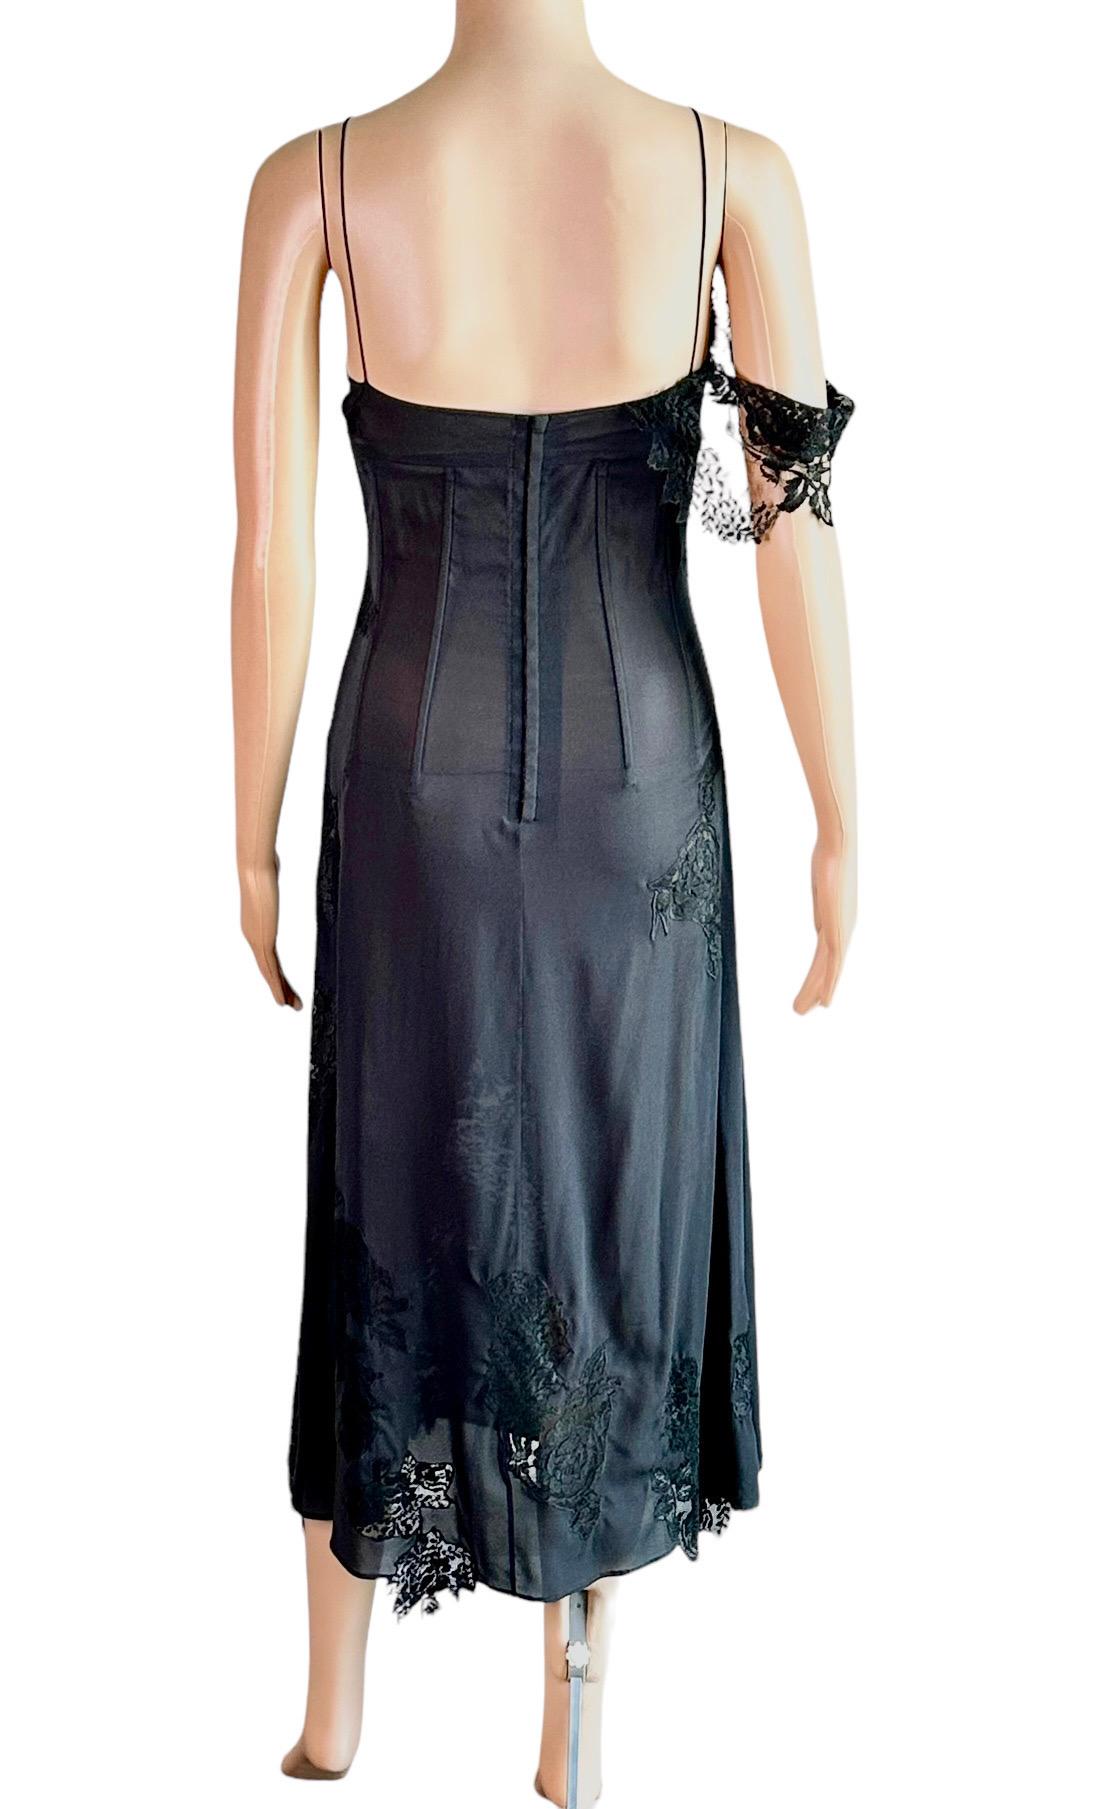 Dolce & Gabbana S/S 2002 Runway Unworn Sheer Lace Corset Black Midi Dress In New Condition For Sale In Naples, FL